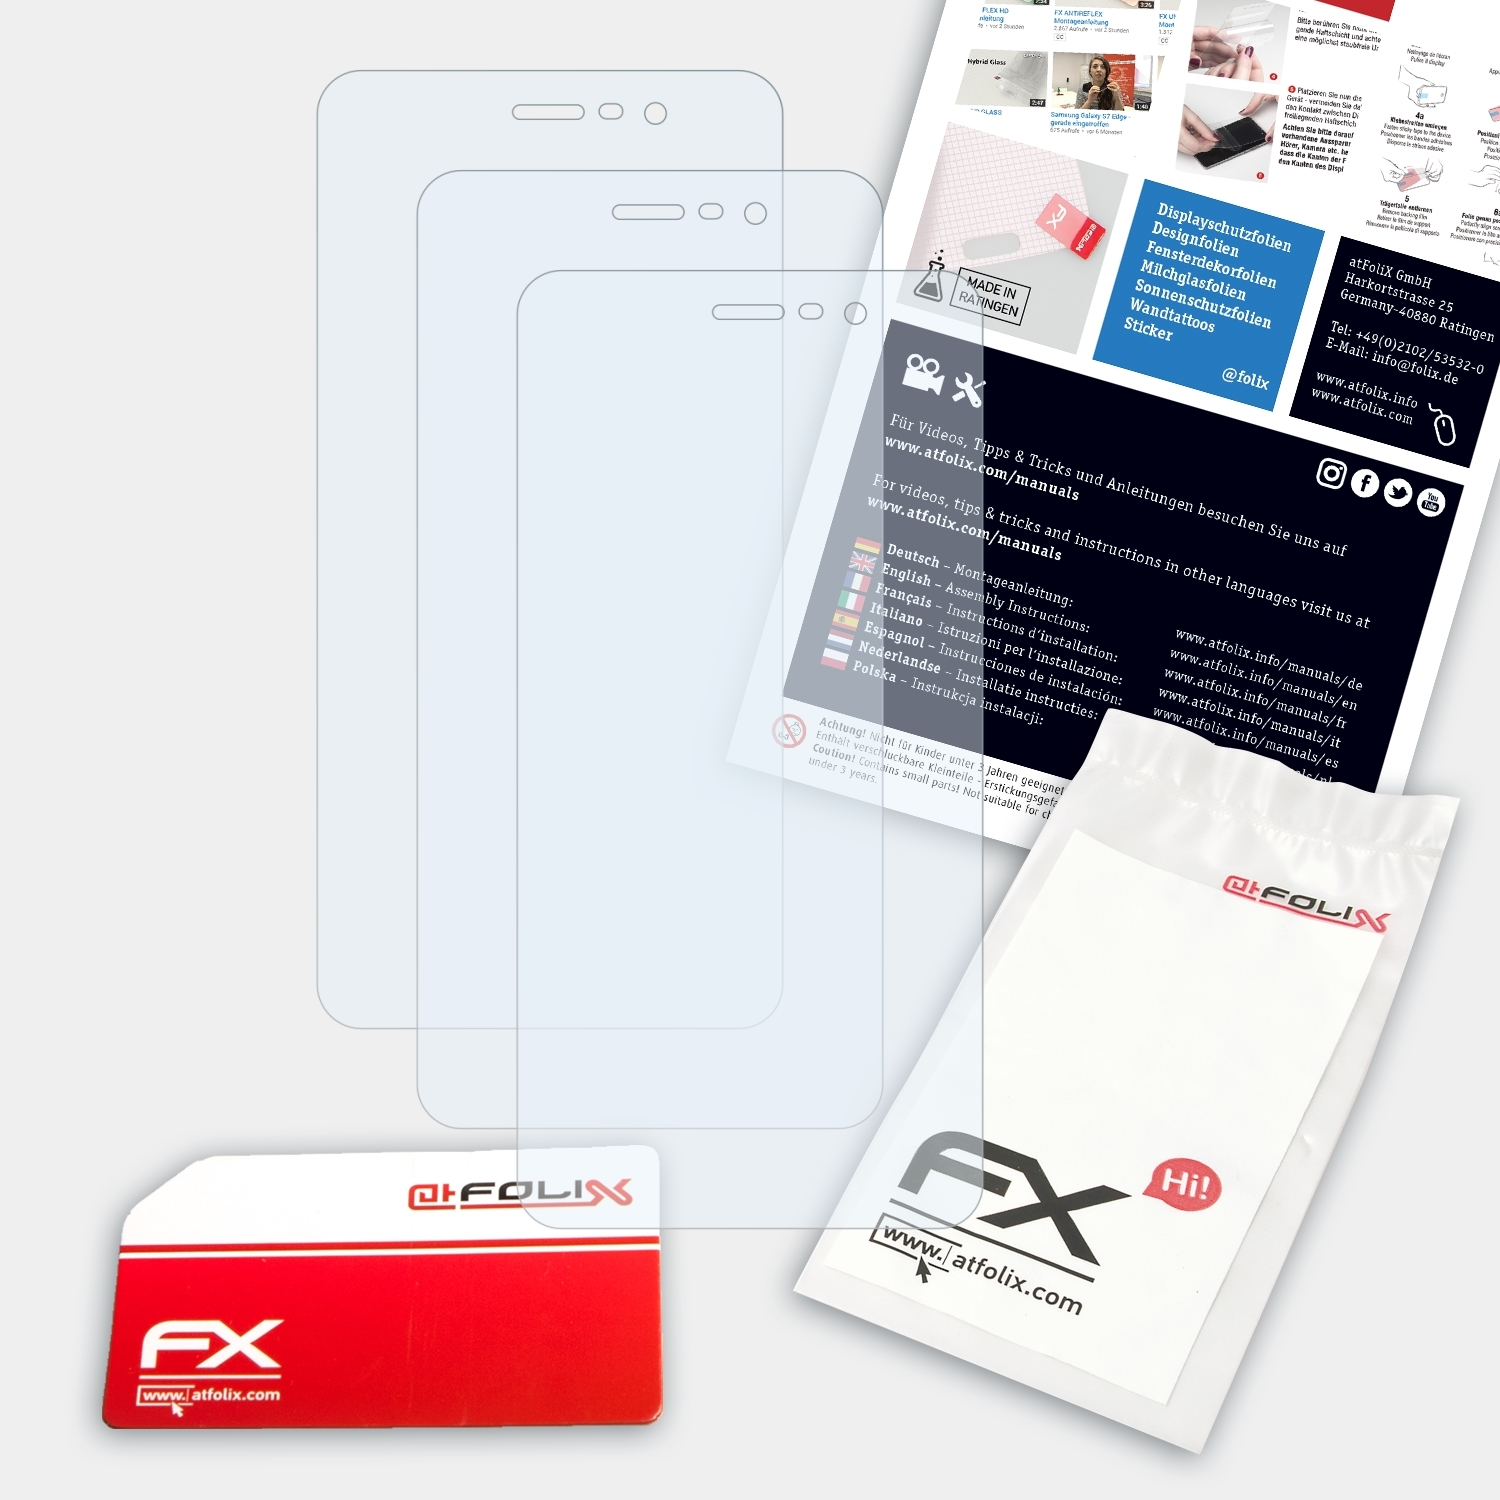 ATFOLIX 3x FX-Clear Displayschutz(für Plus) 4 Wiko Lenny